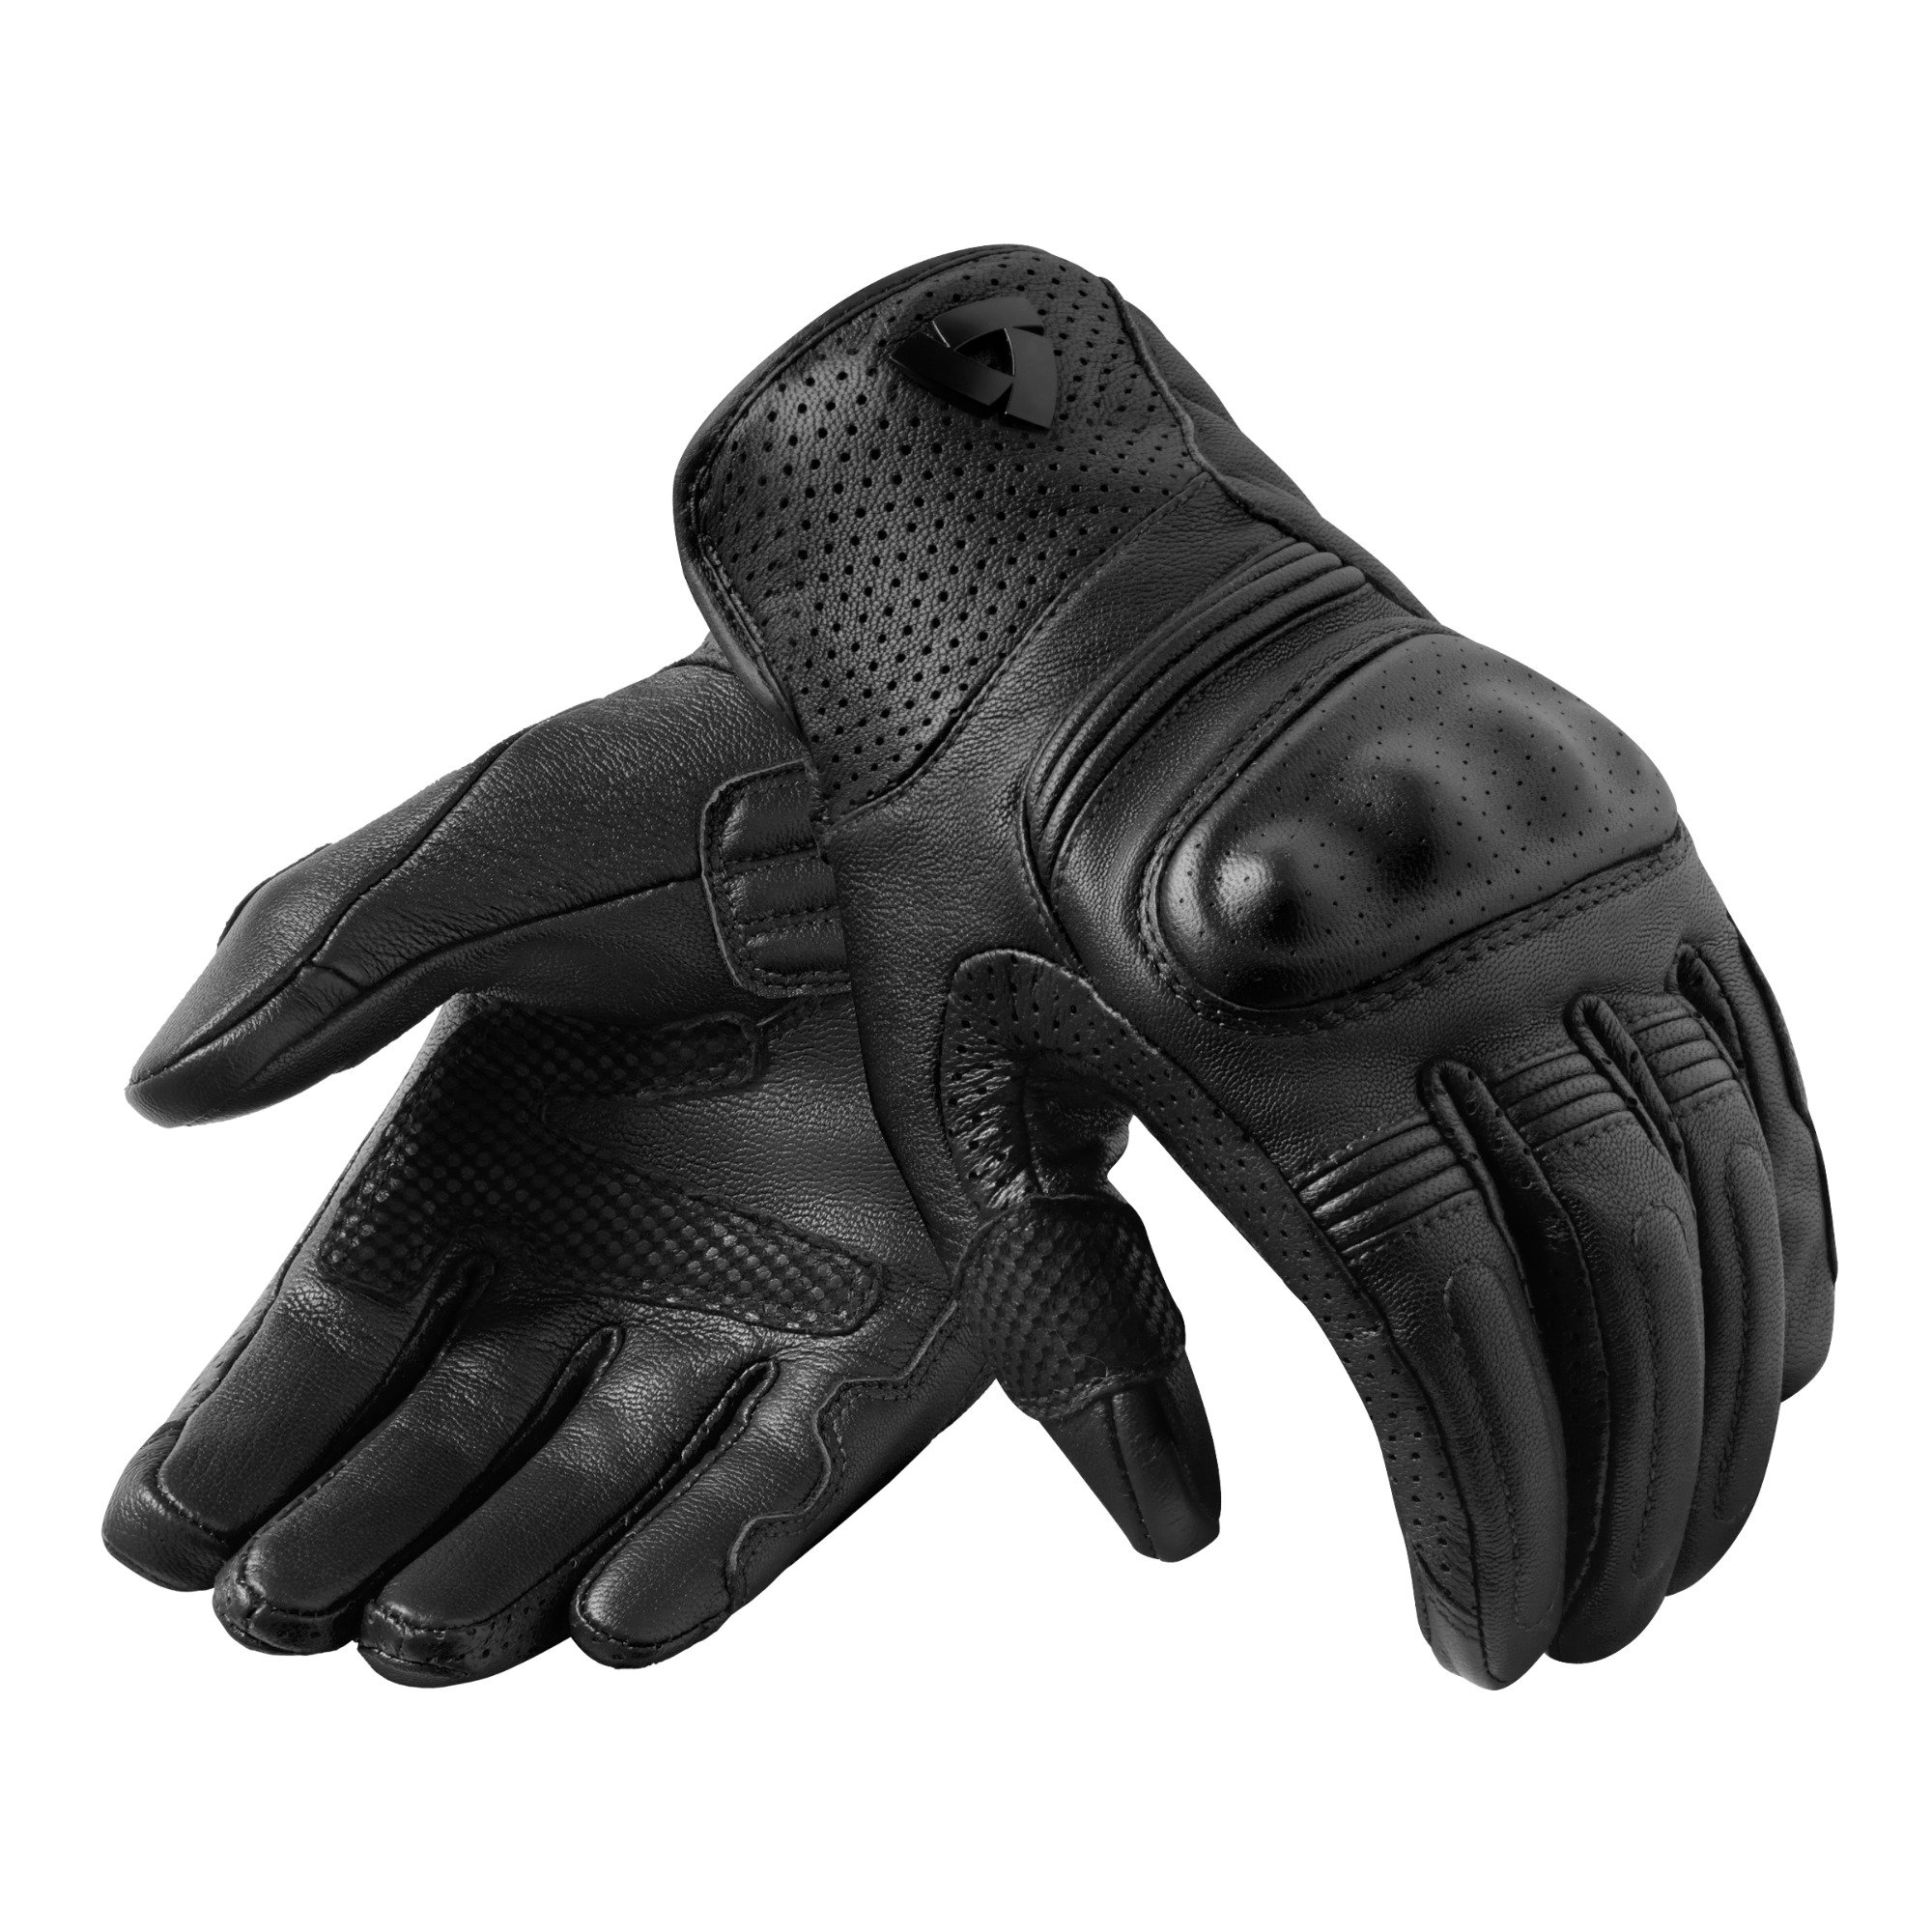 Image of REV'IT! Gloves Monster 3 Black Size S ID 8700001360111